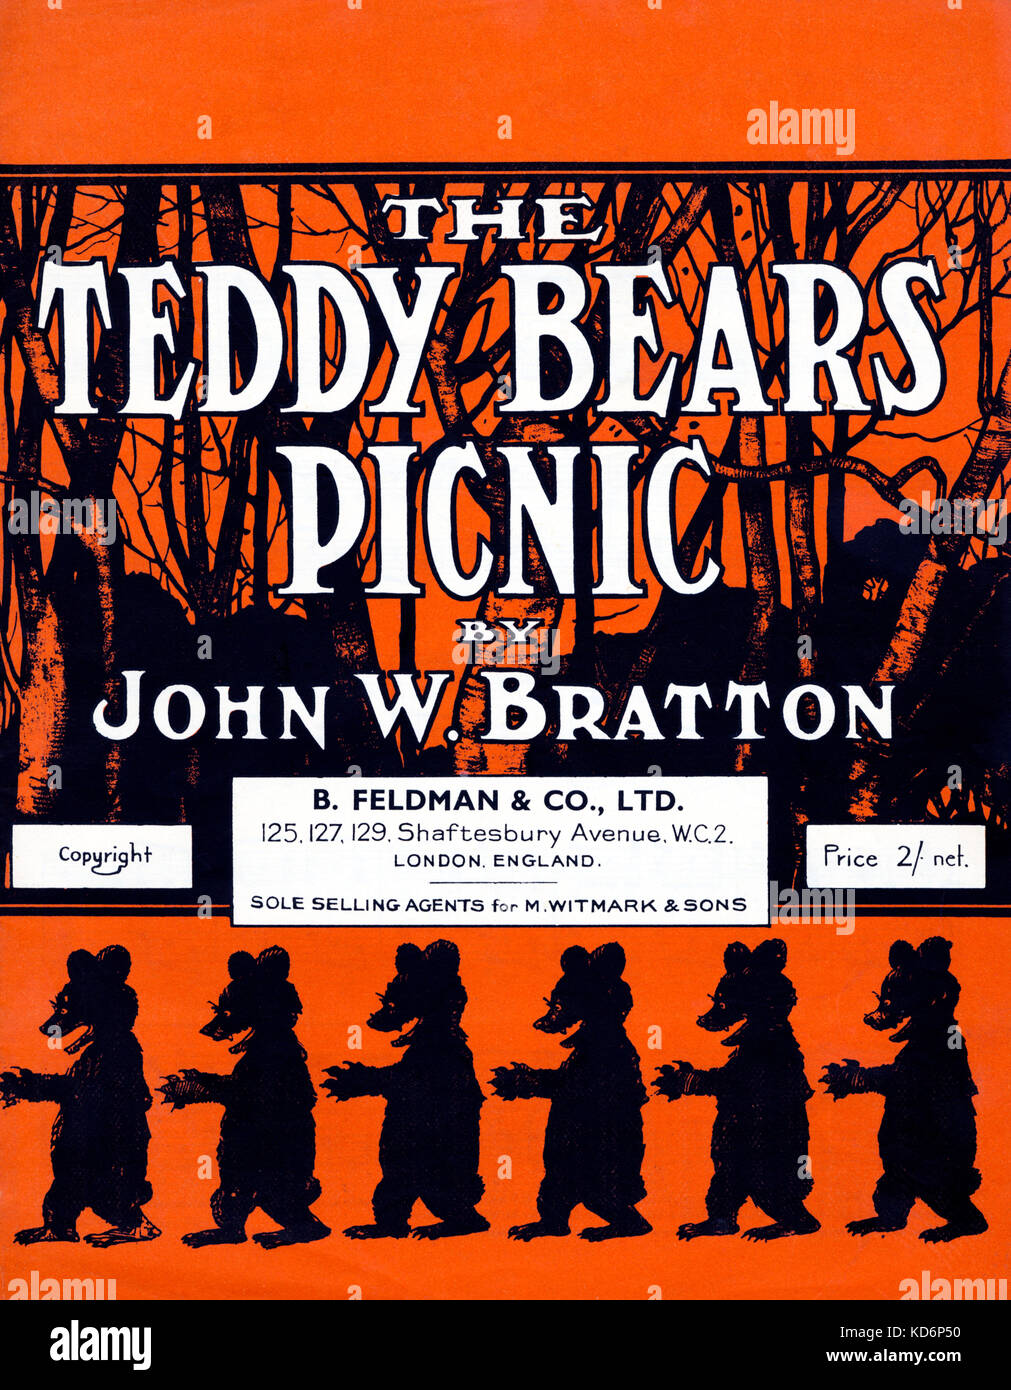 The Teddy Bears Picnic score cover / music sheet by John W Bratton Published by B. Feldman, London Stock Photo